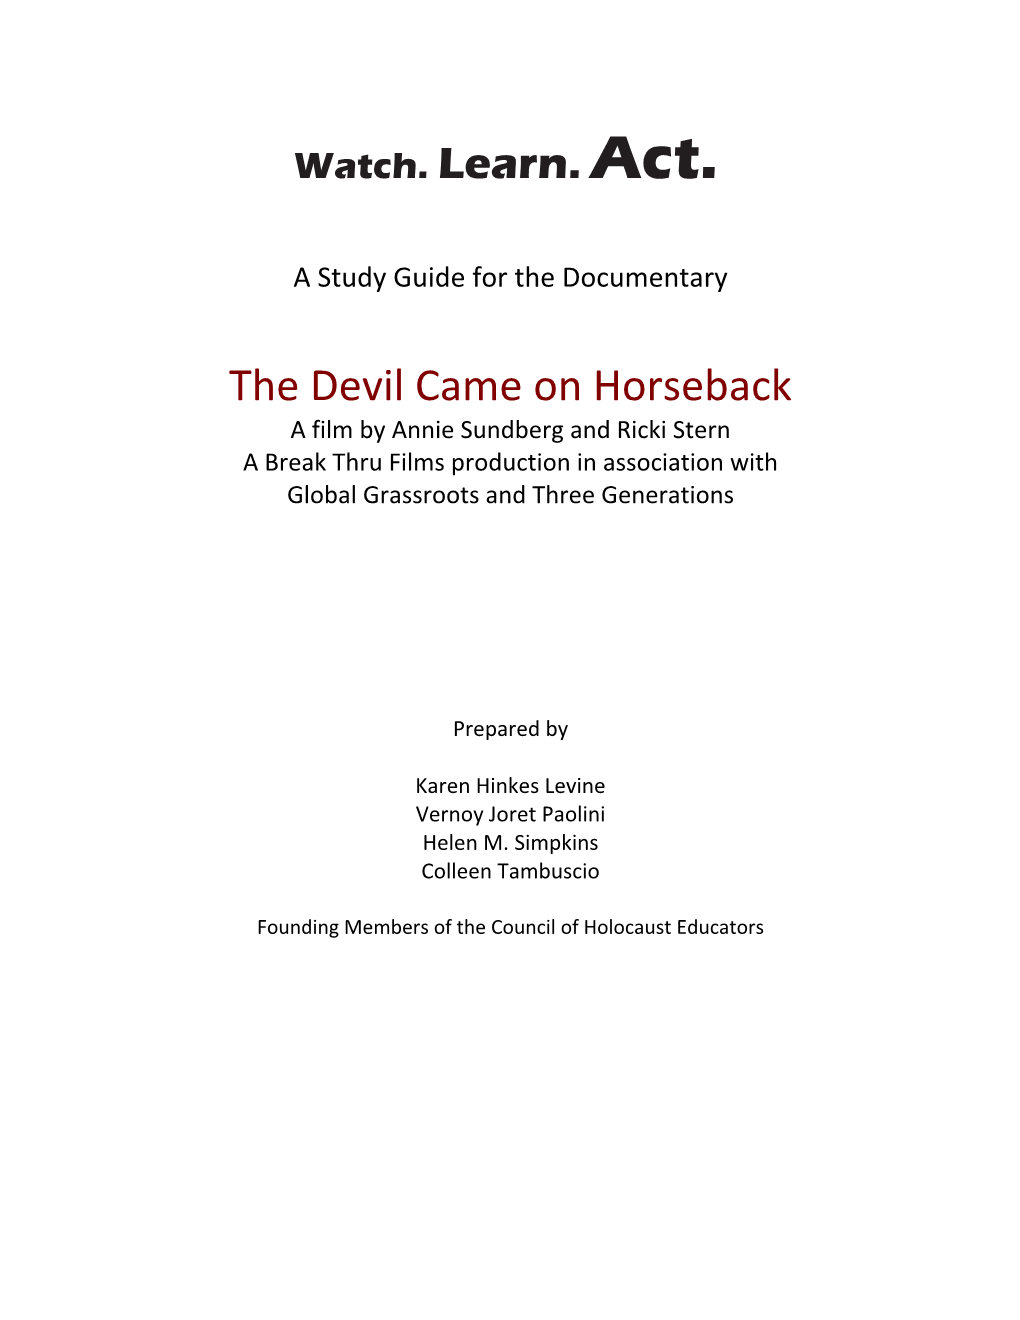 The Devil Came on Horseback Study Guide